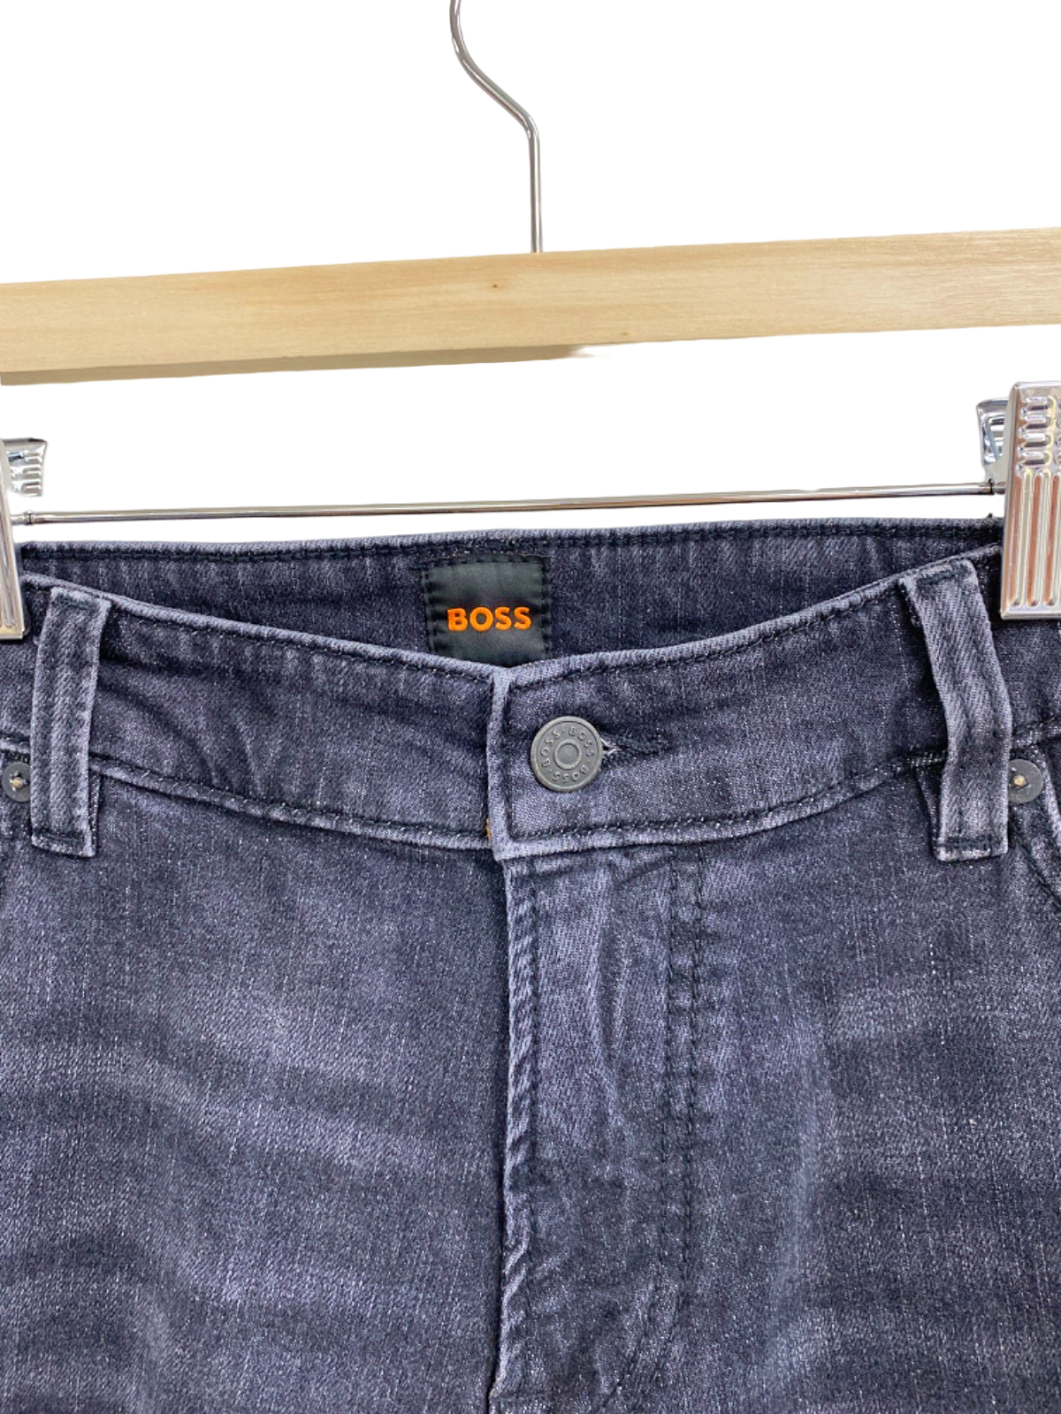 Hugo Boss Grey Denim Re.Maine-Shorts Regular Fit W34)